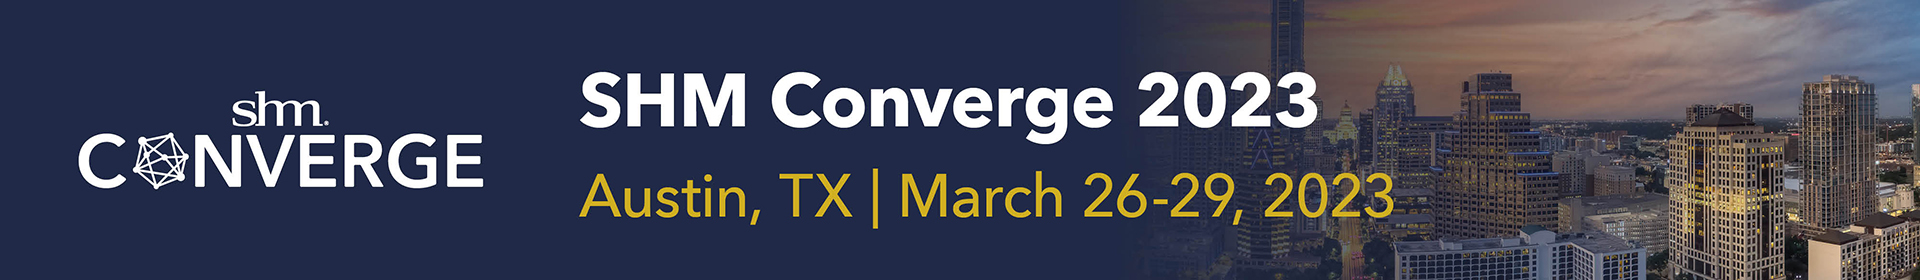 SHM Converge 2023 Event Banner